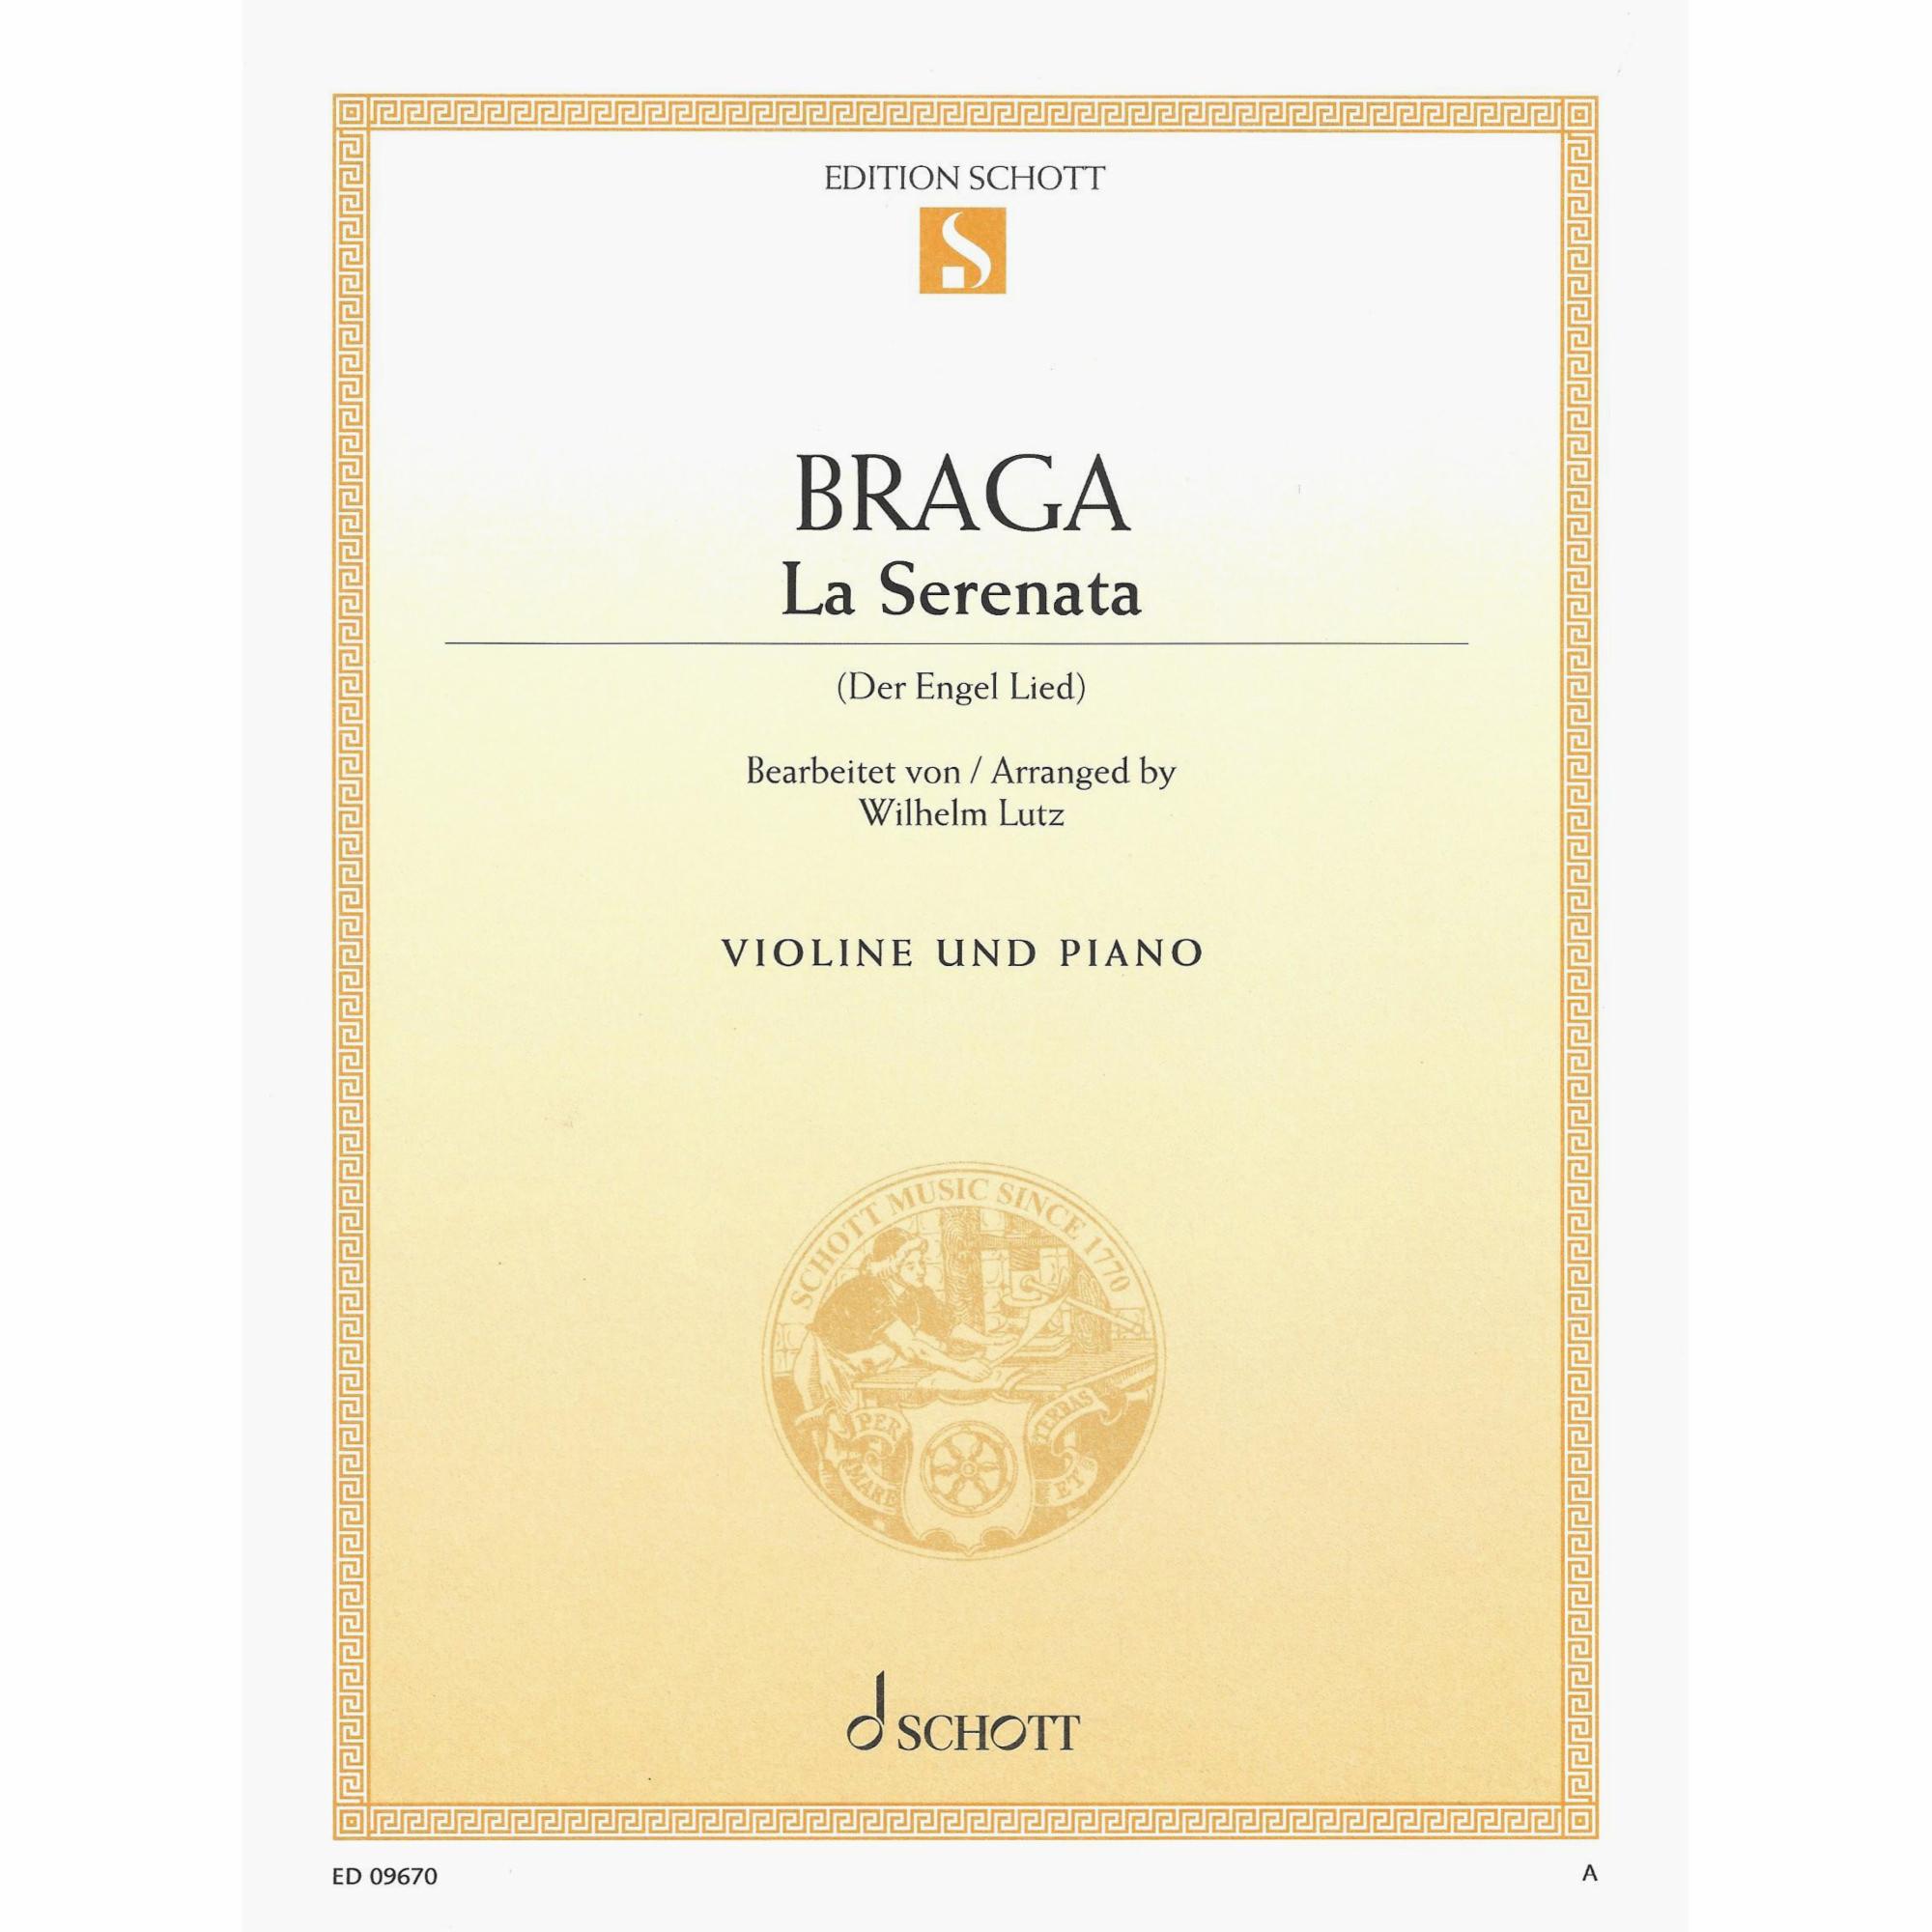 Braga -- La Serenata (Der Engel Lied) for Violin and Piano